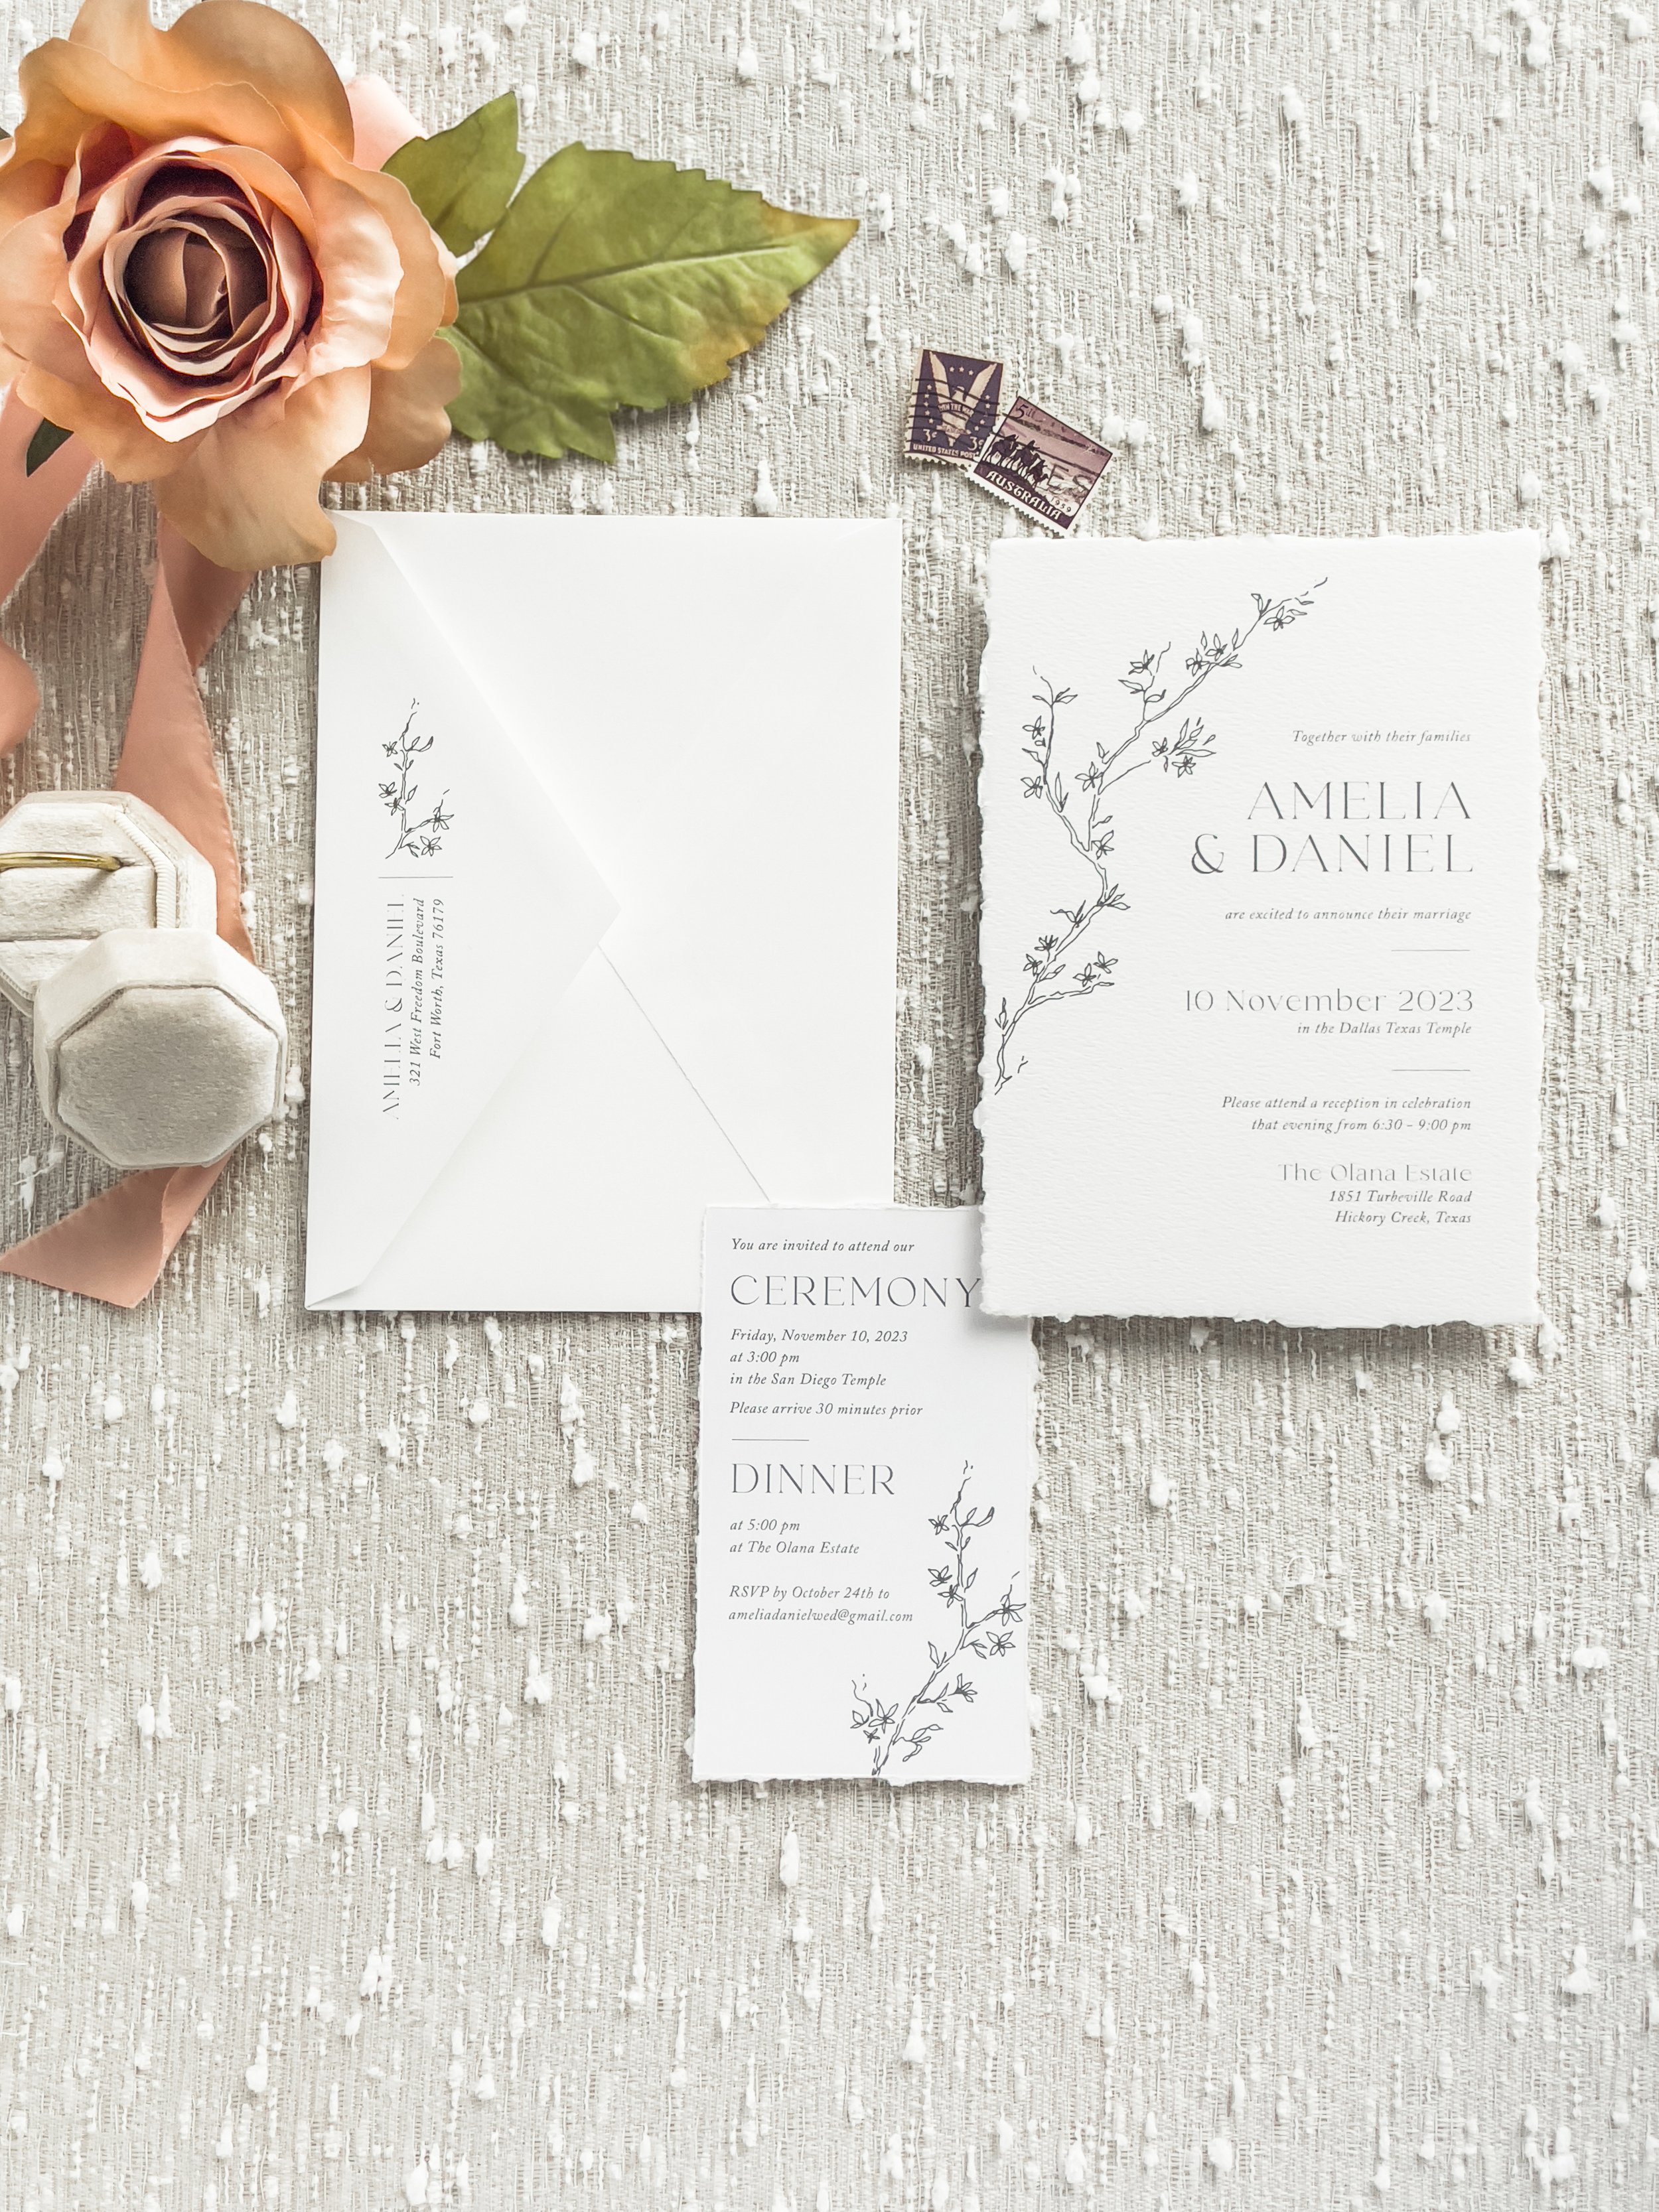 Anthology Print Wedding Invitations - Deckle Hand Torn Edge Wedding Invitaitons - luxury wedding invitations1.jpg